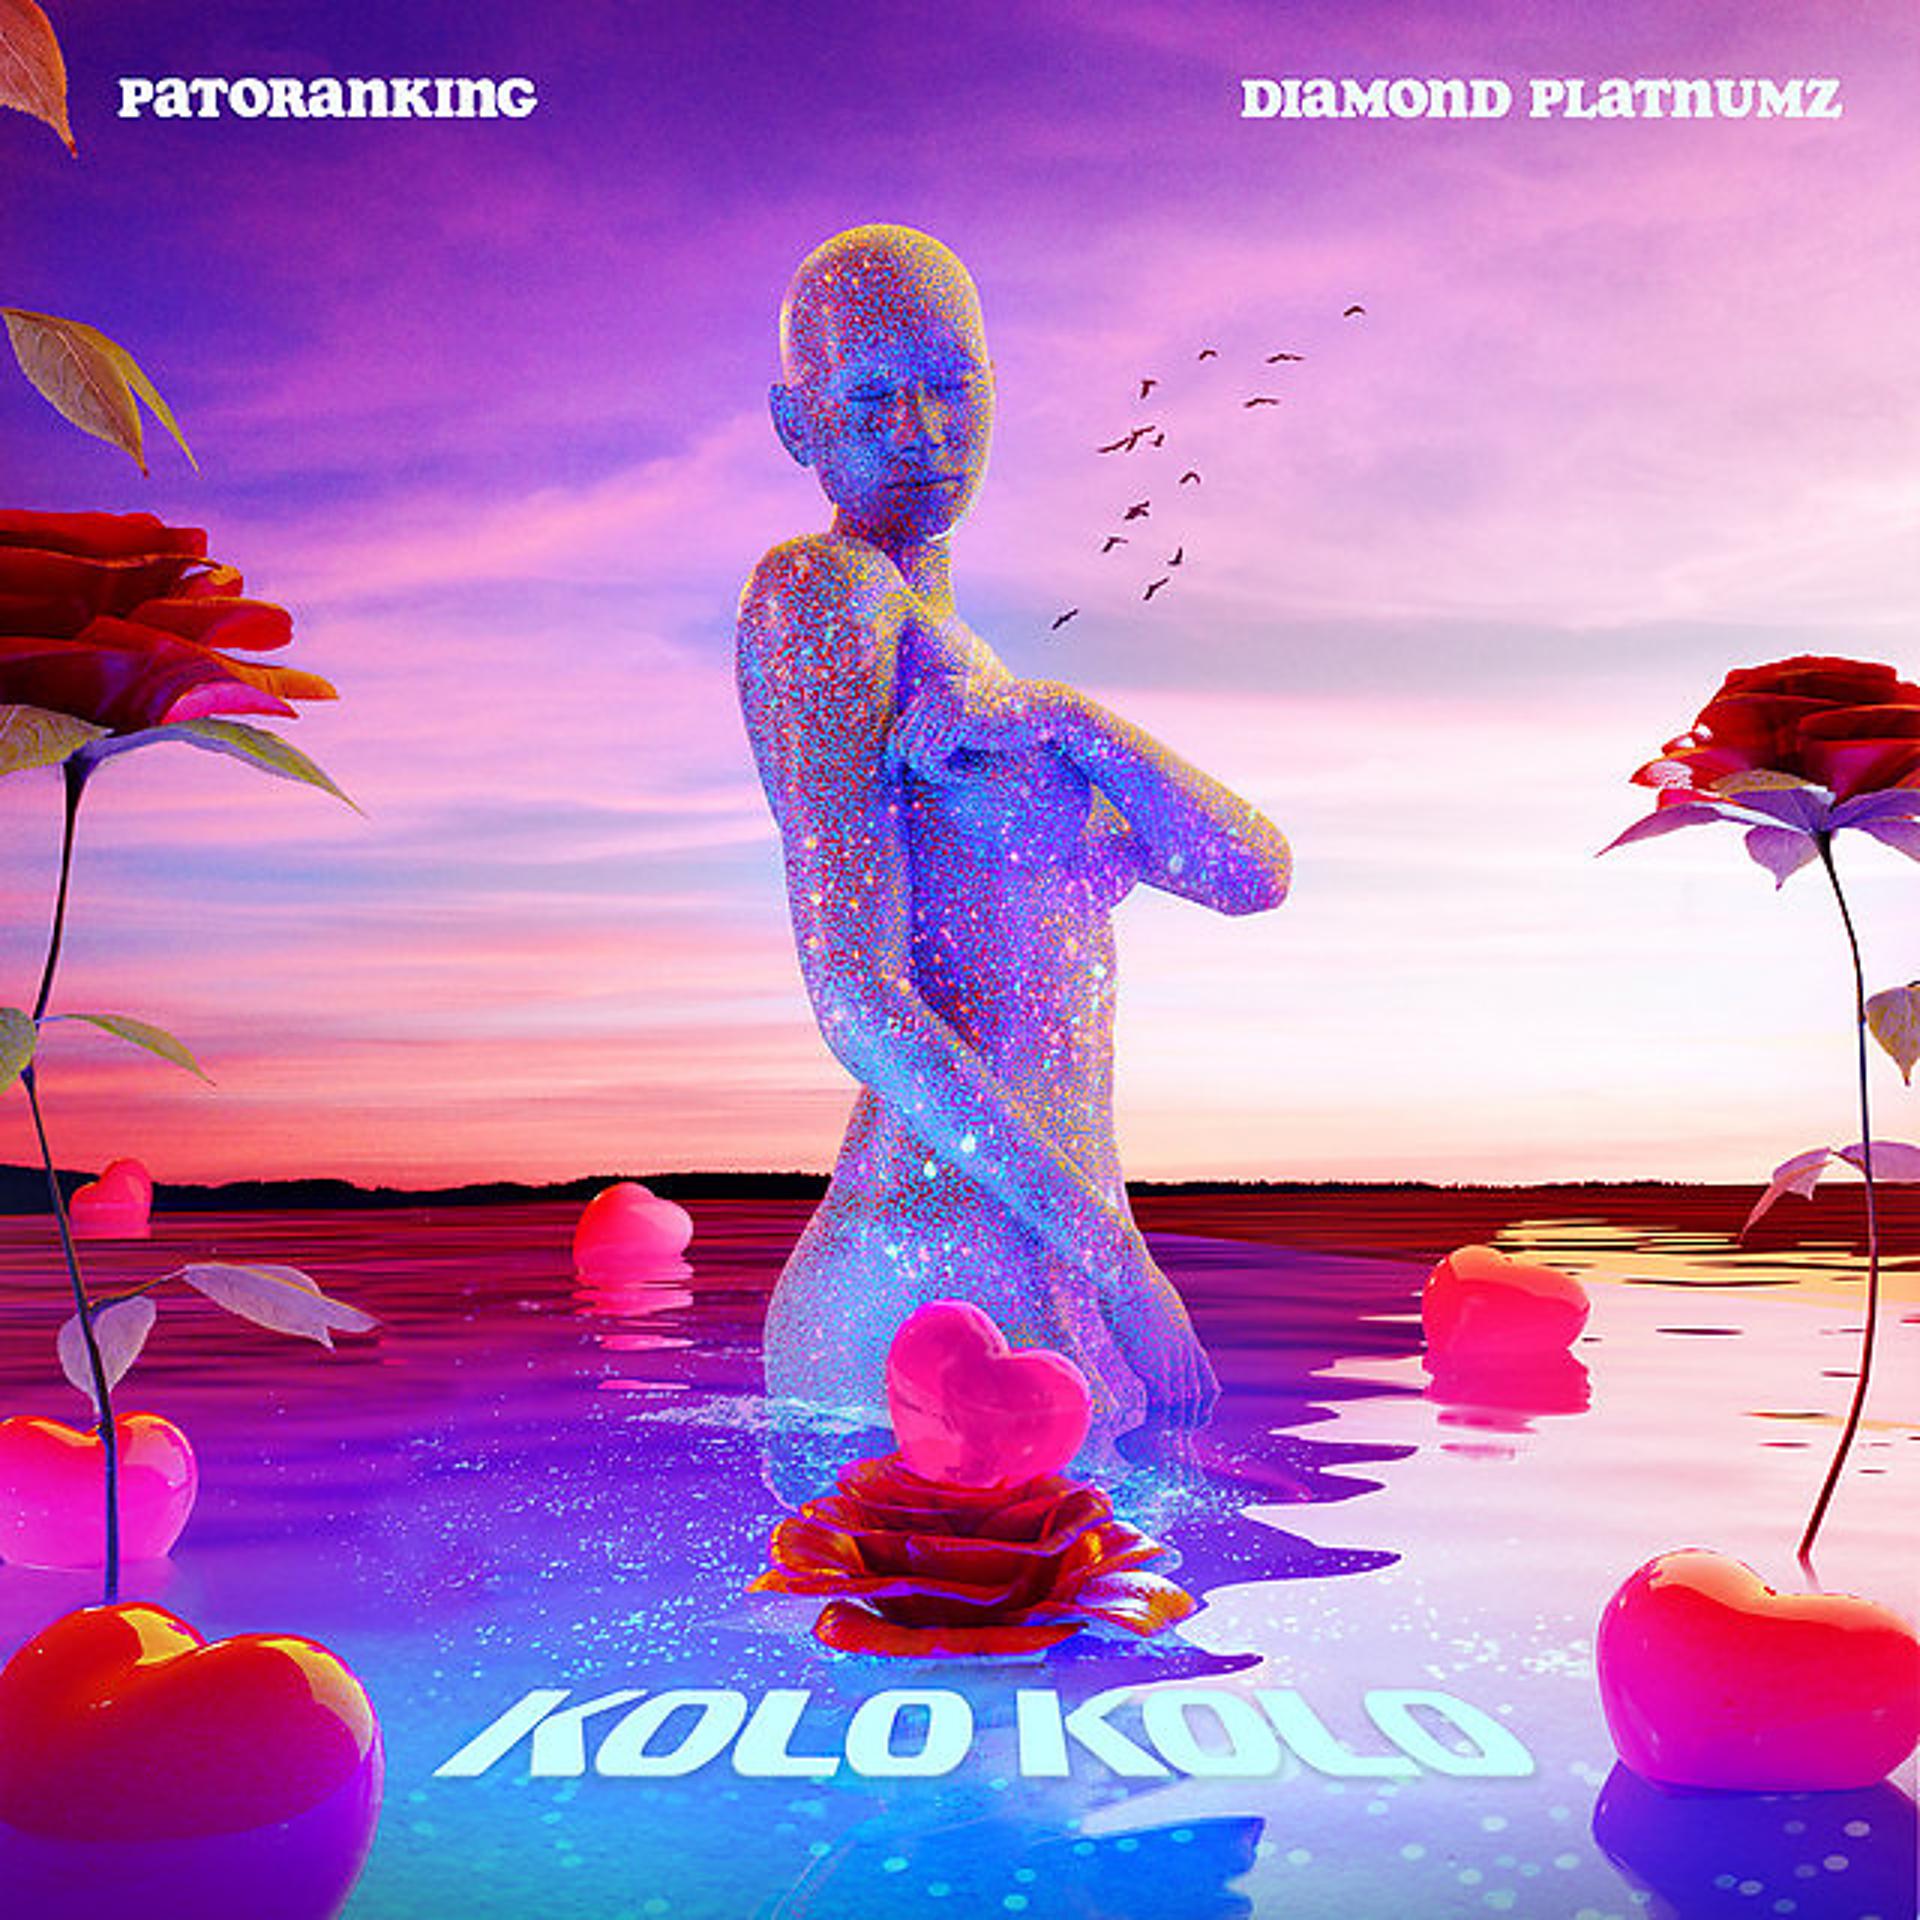 Песня коло. Patoranking kolo kolo [feat. Diamond Platnumz] Official Music Video. Masterkraft feat. Diamond Platnumz & Flavour - abeykehh.